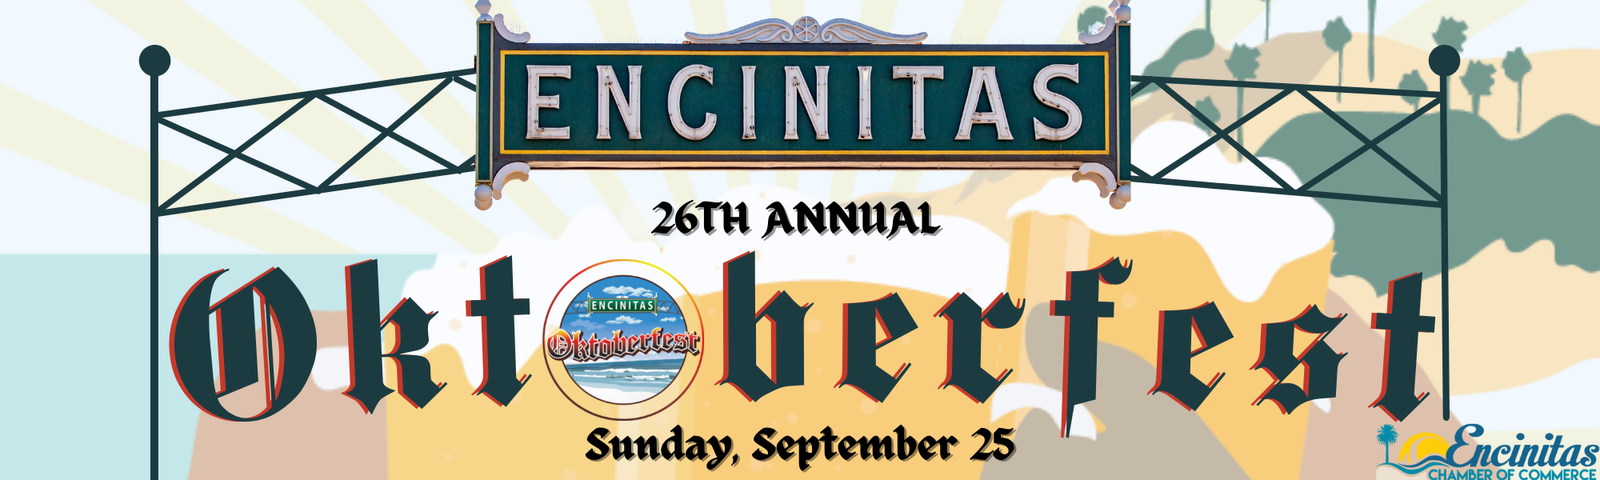 Encinitas Oktoberfest San Diego Oktoberfest Event in Encinitas